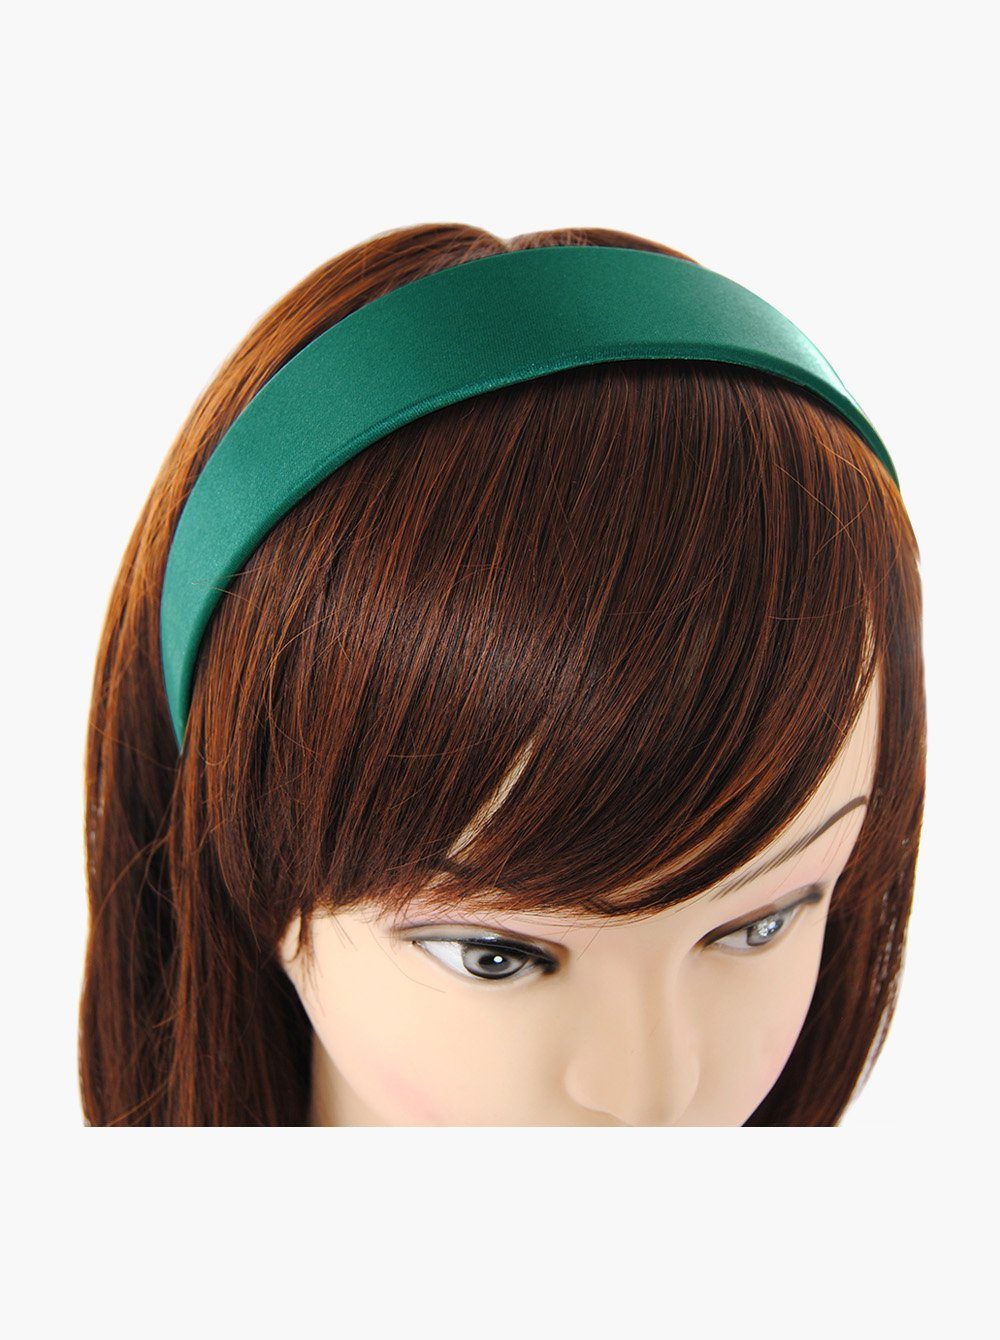 Beliebtester Artikel in unserem Geschäft axy Haarreif Breiter mit Vintage Klassik-Look Haareifen Damen Grün Haarband Satin bezogen, Haarreif